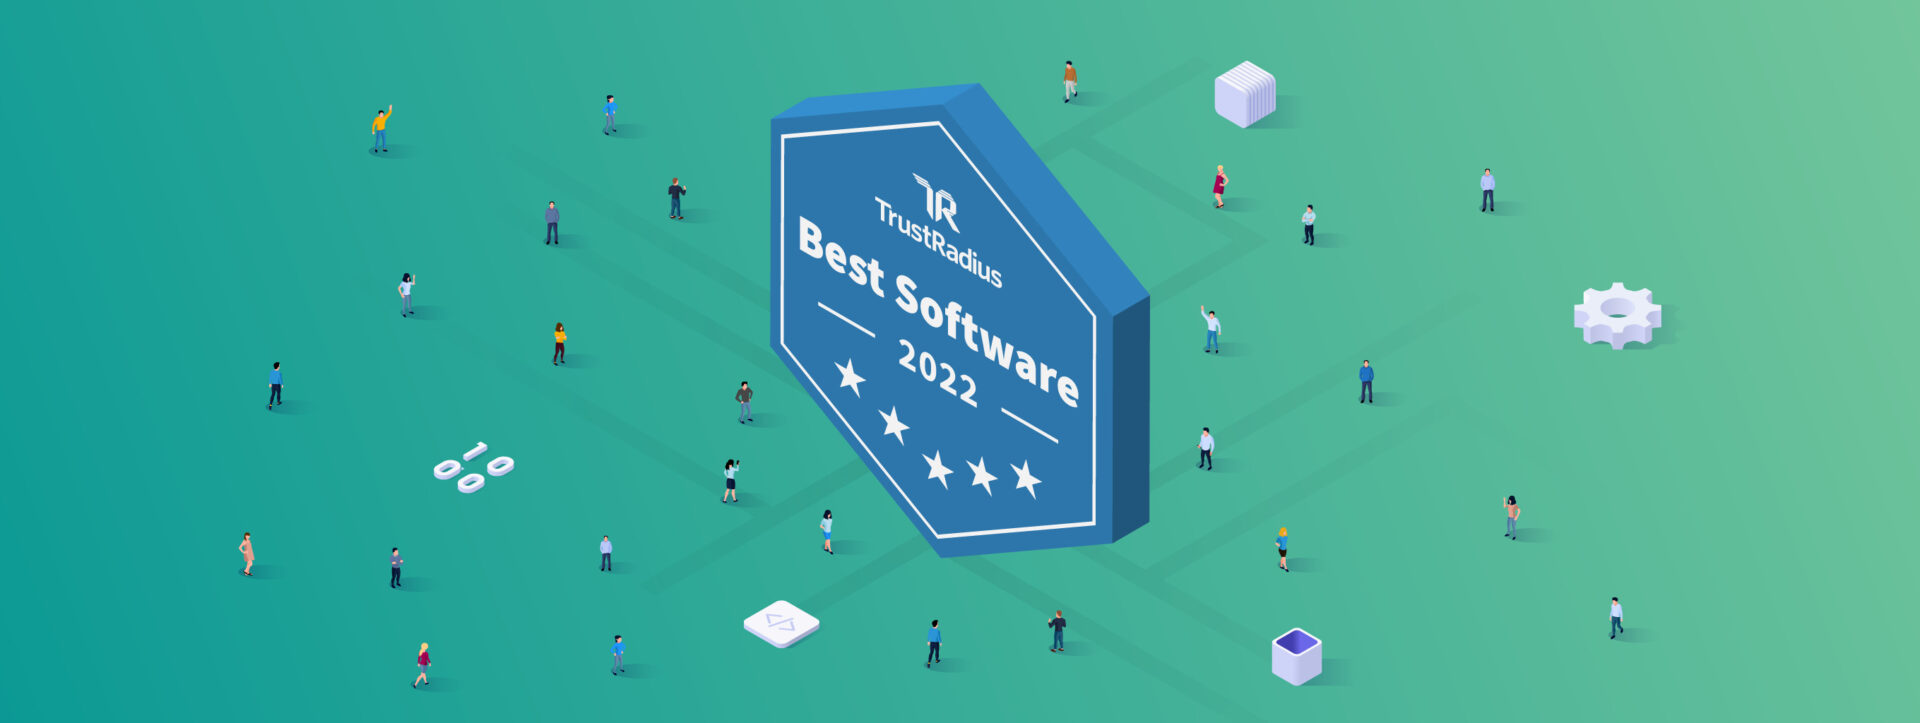 trustradius best software list